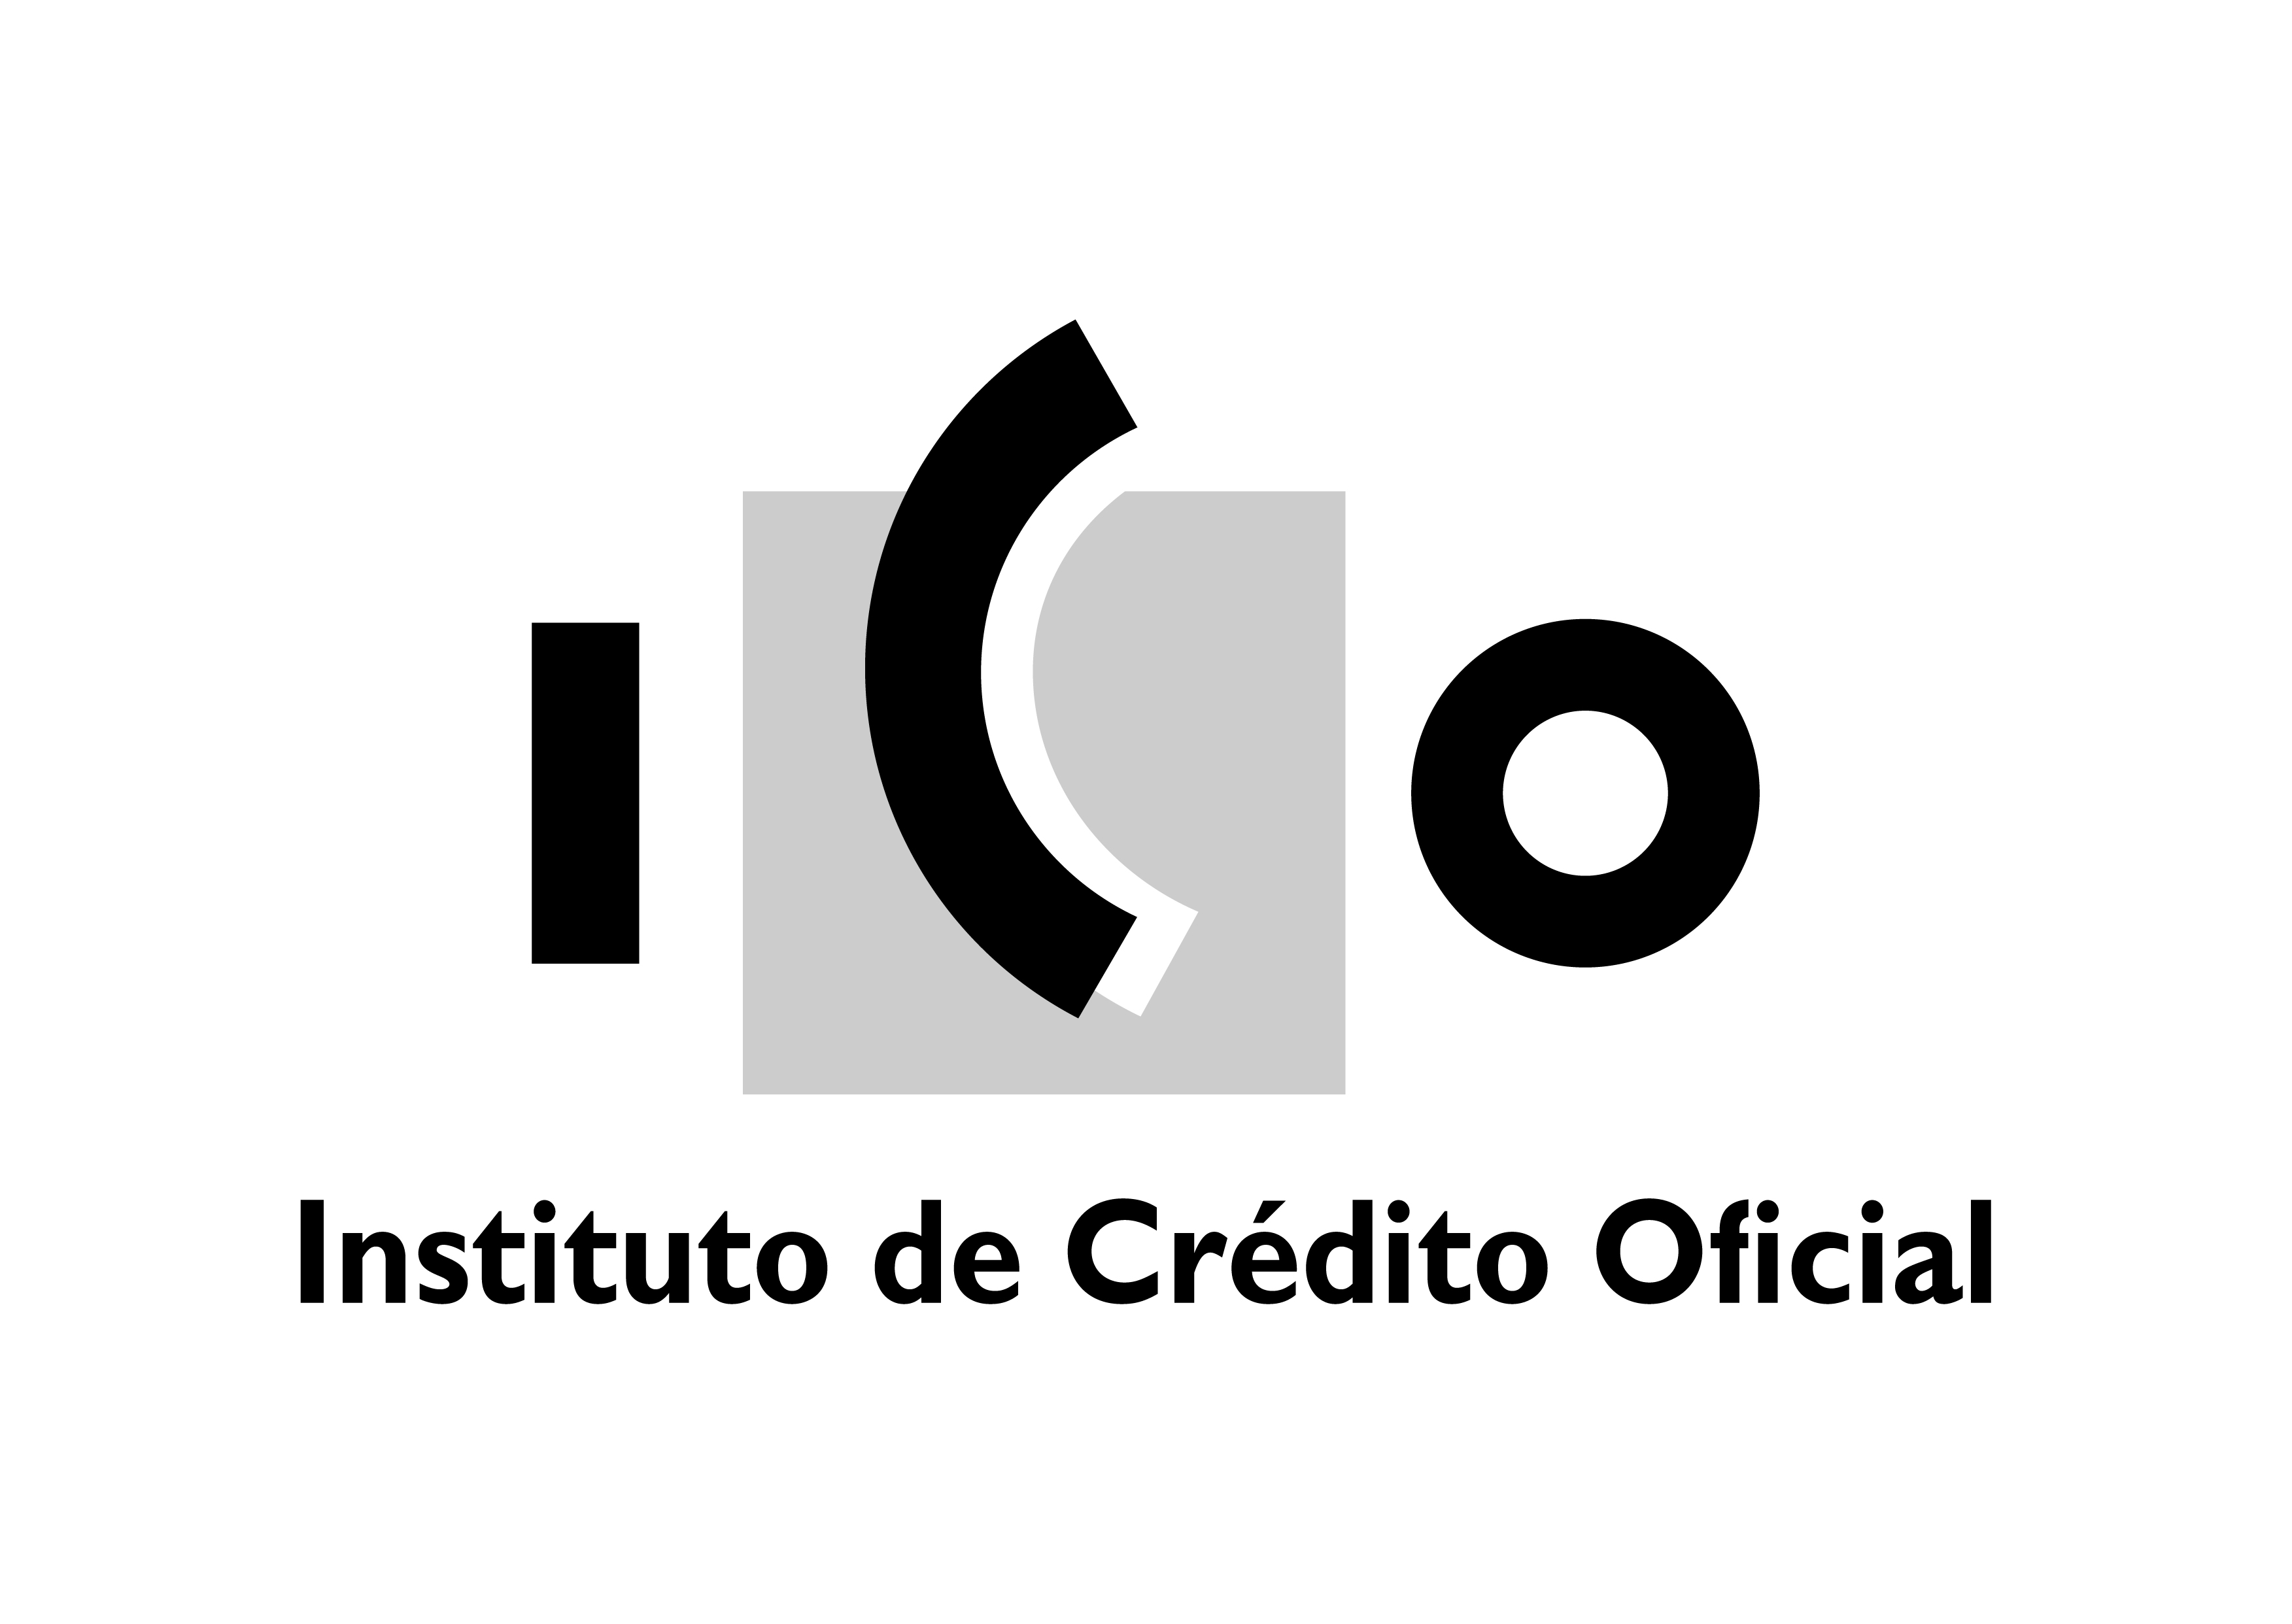 Logotipo ICO escala de grises